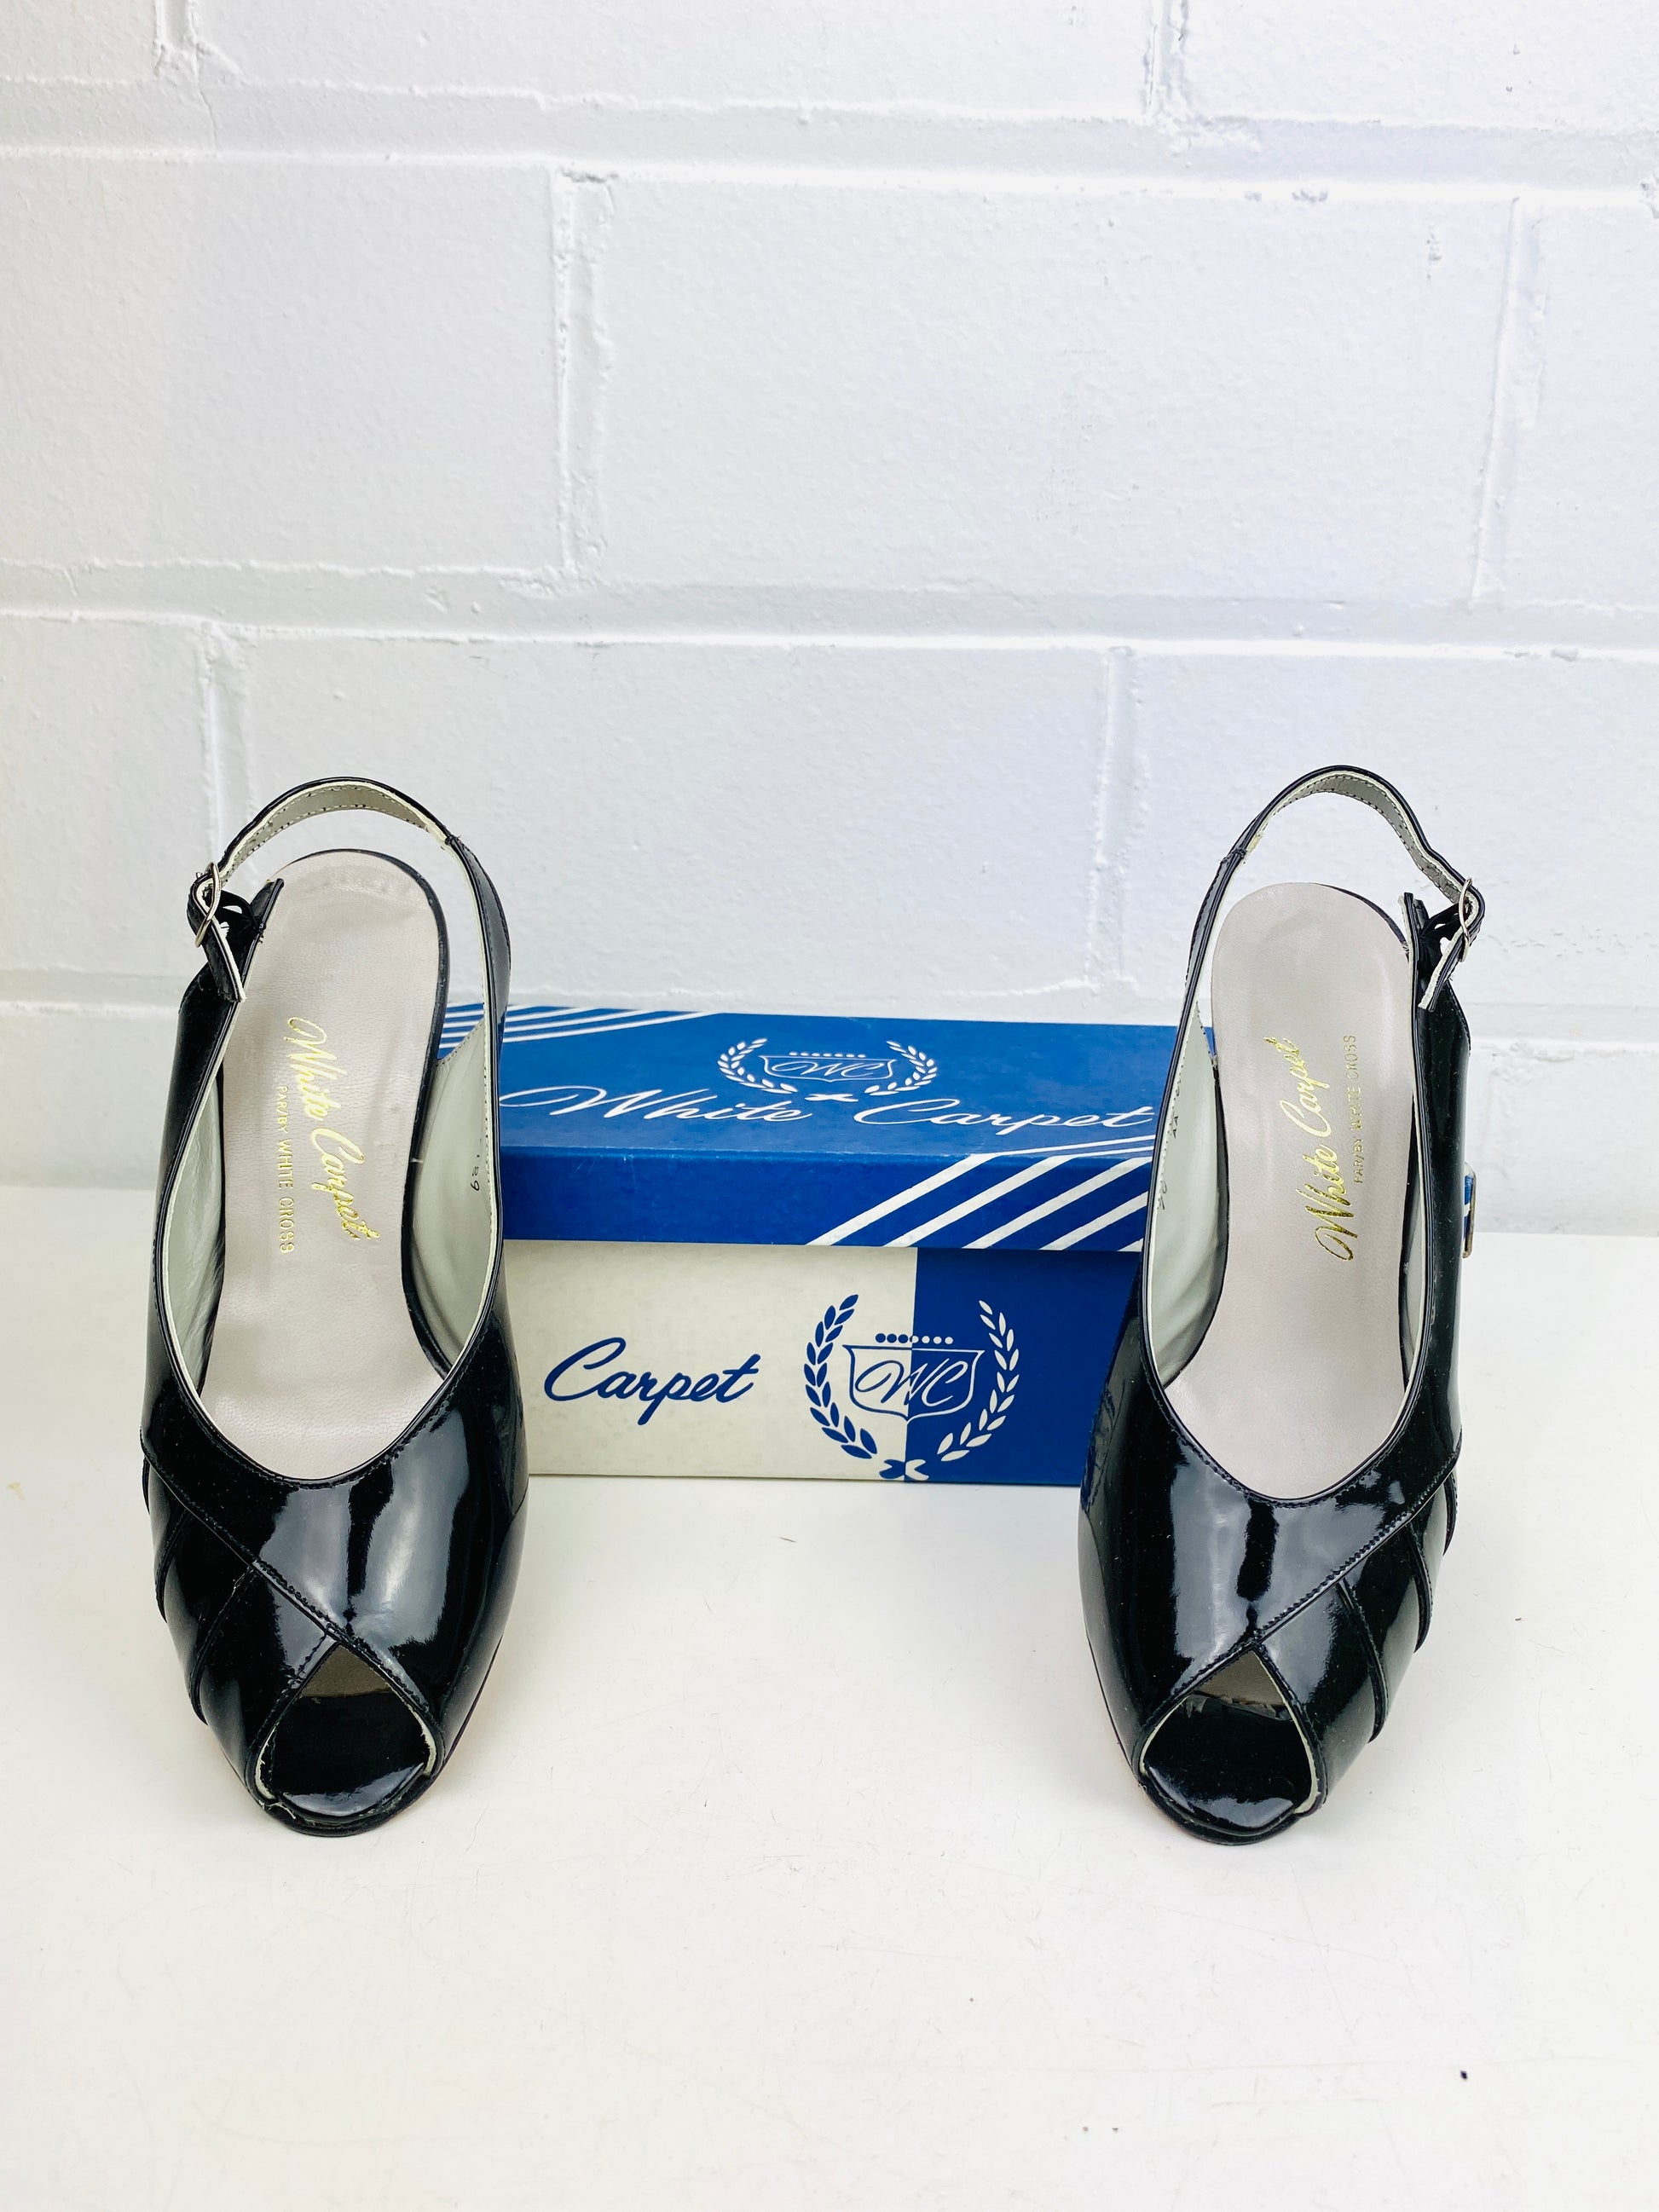 Vintage Deadstock Shoes, Women's 1980s Black Sling-Back Patent Leather Pumps NOS